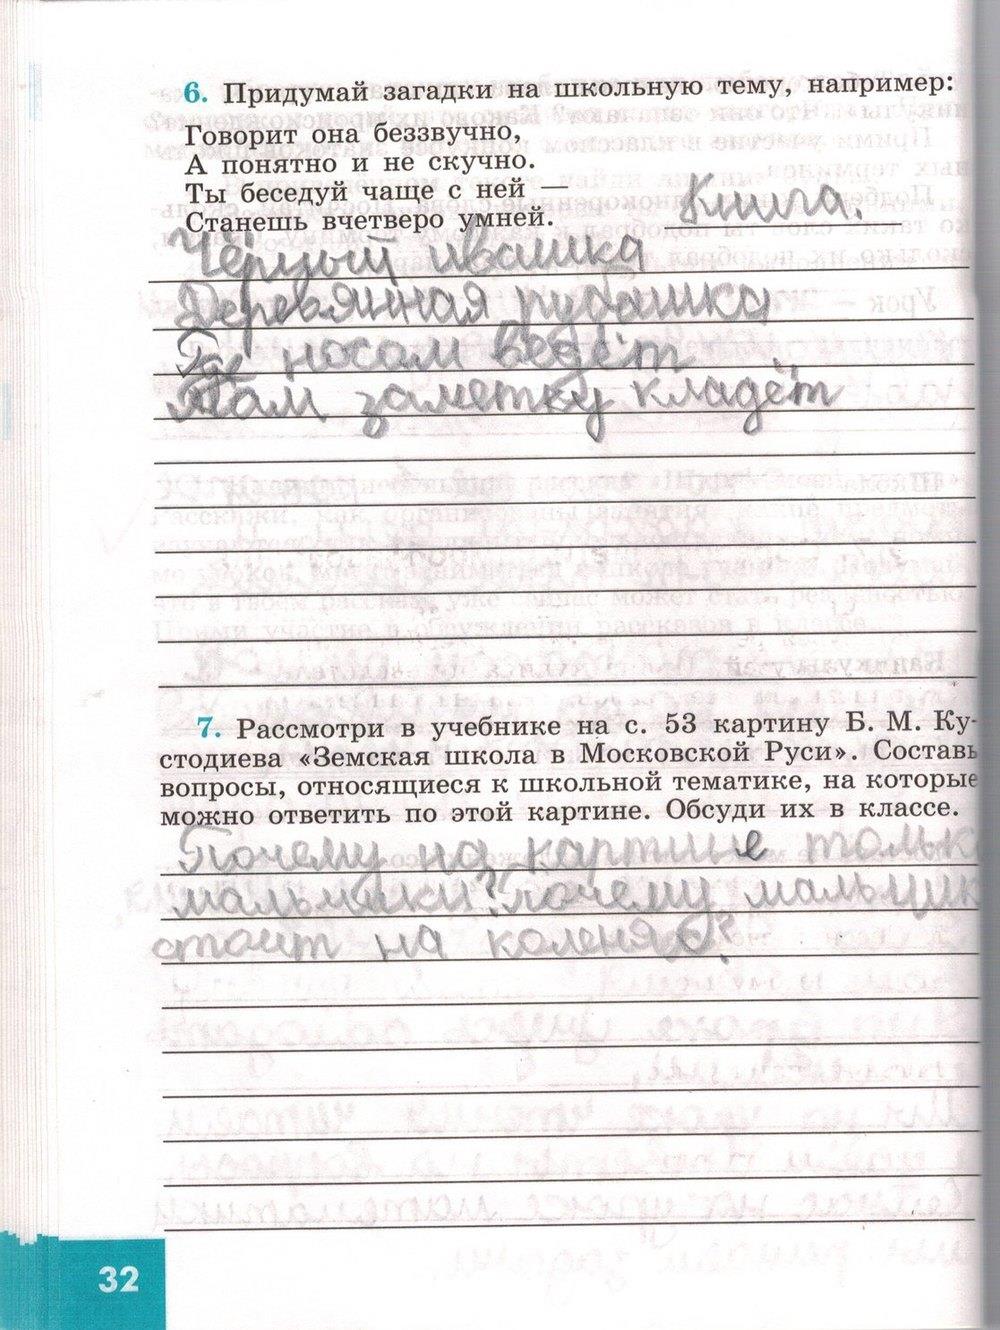 гдз 5 класс рабочая тетрадь страница 32 обществознание Иванова, Хотеенкова